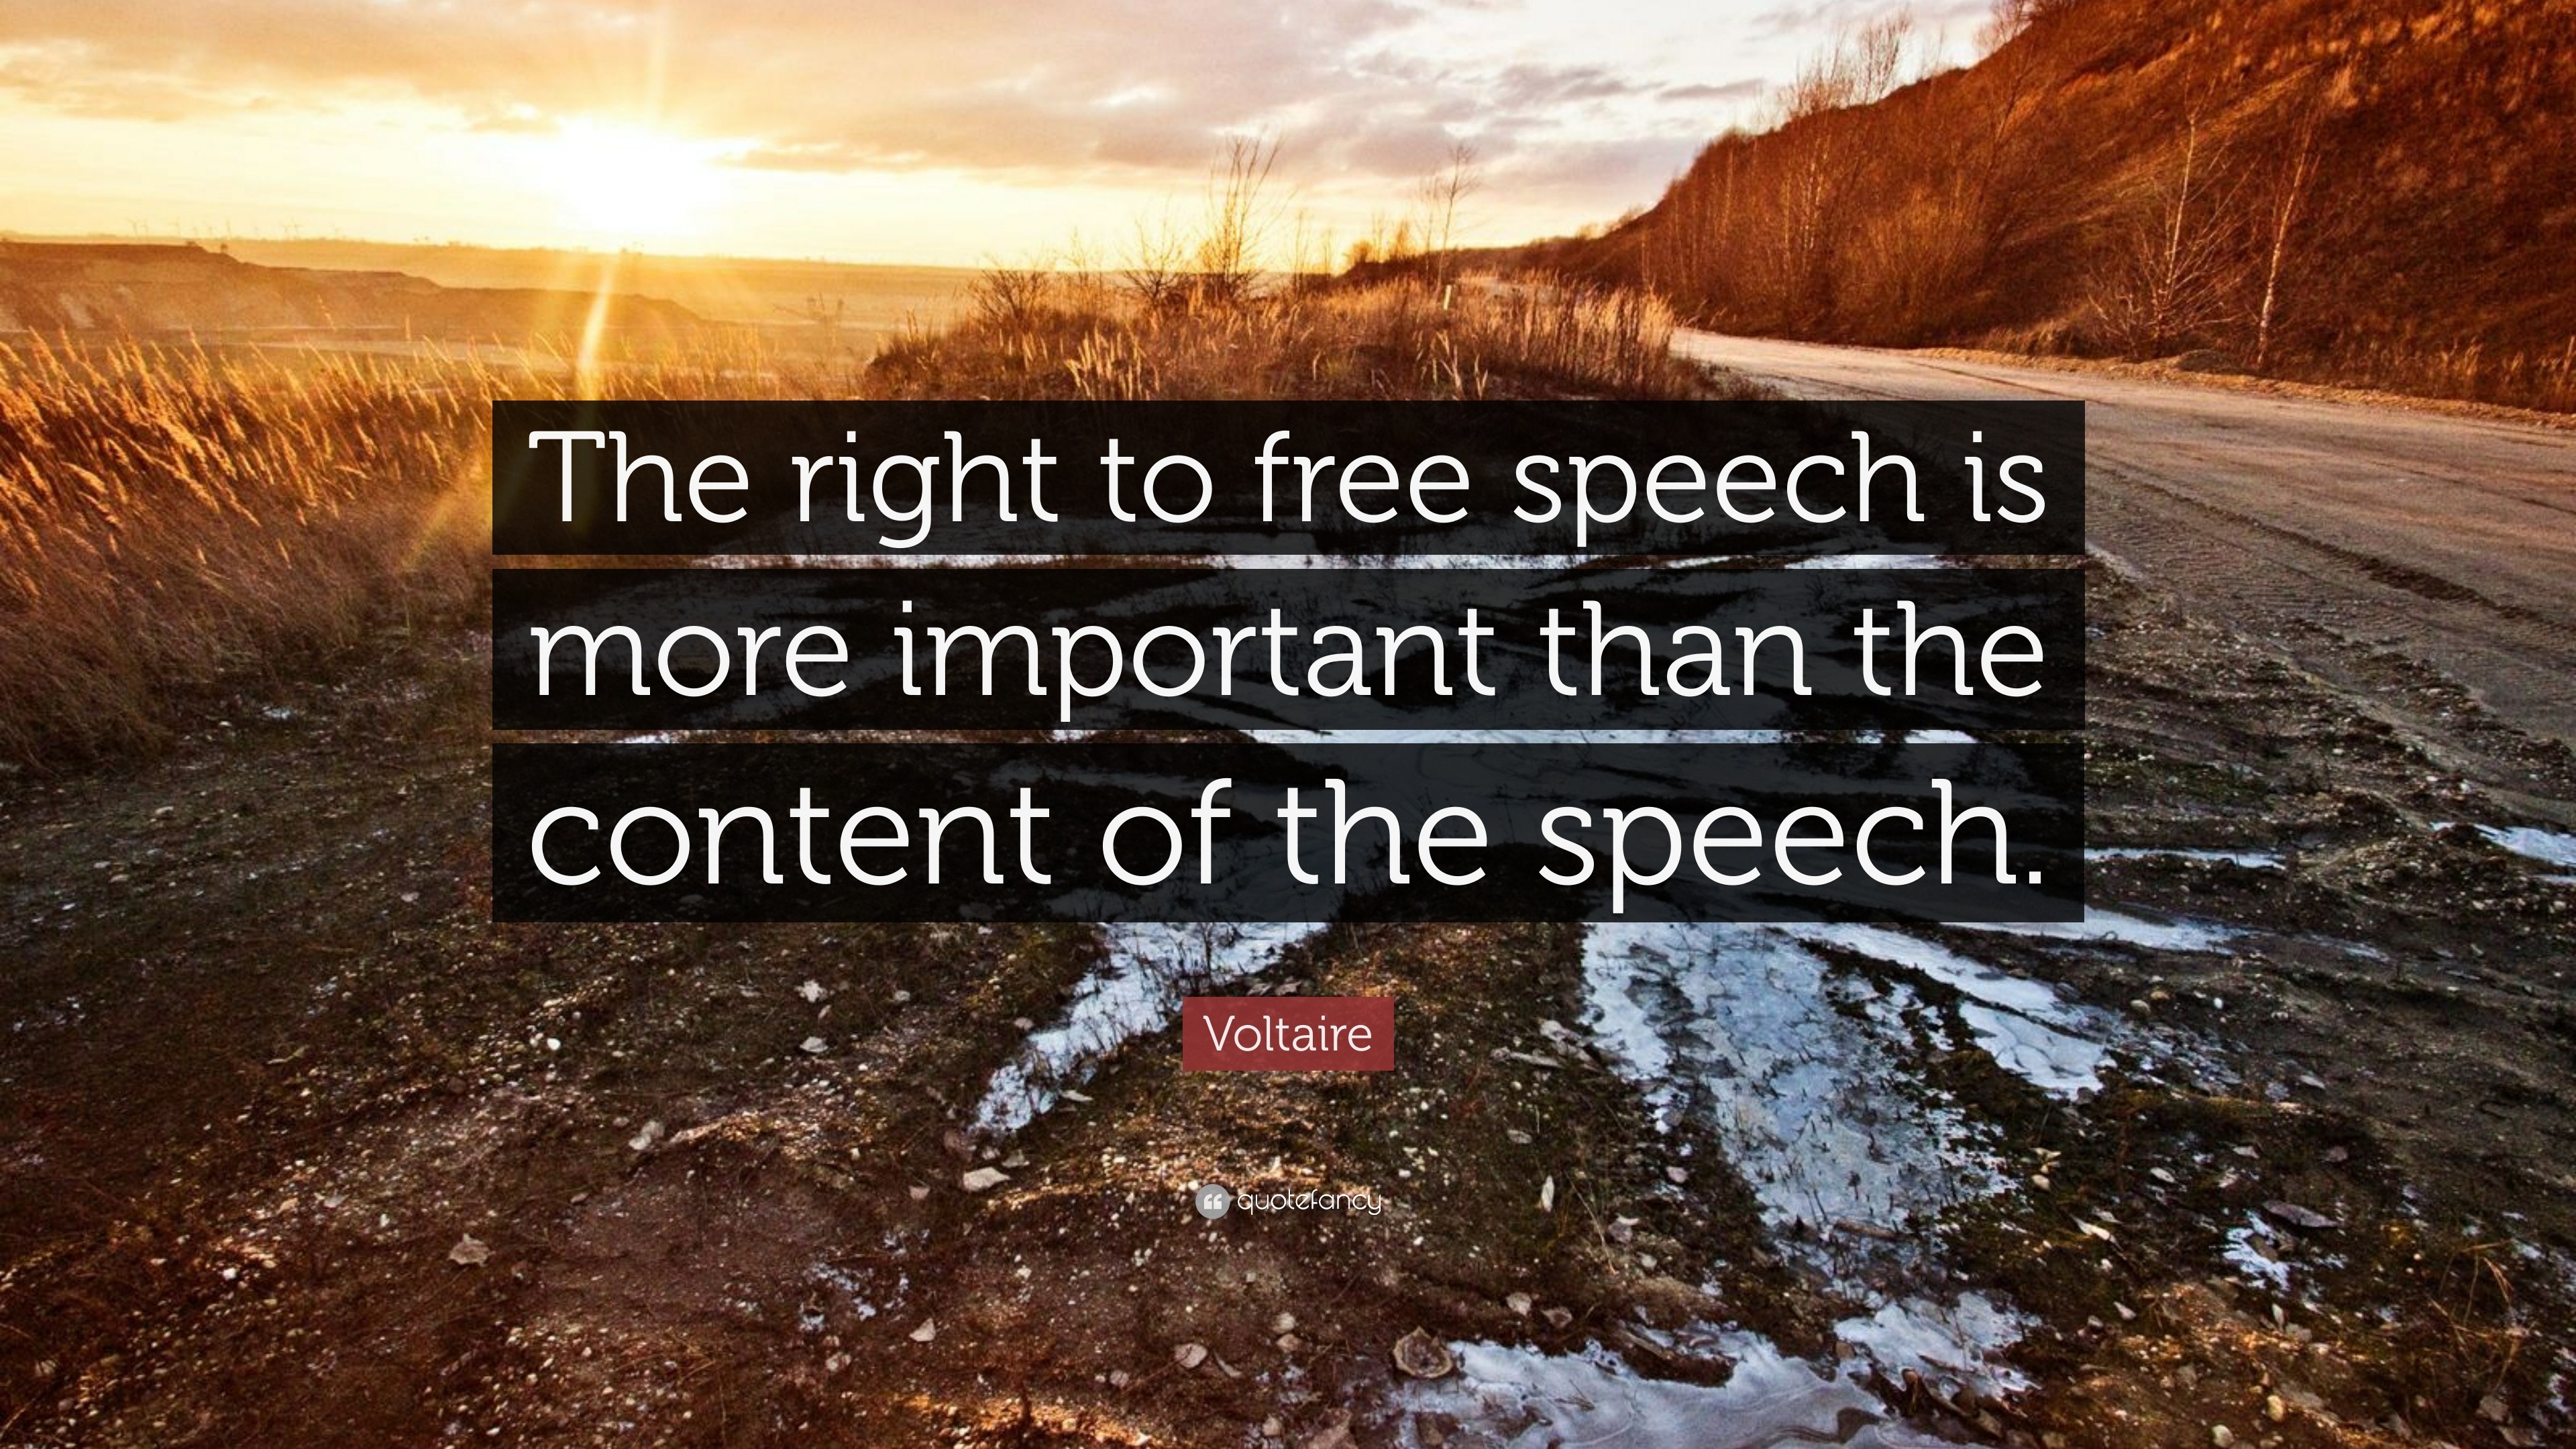 speech is very important